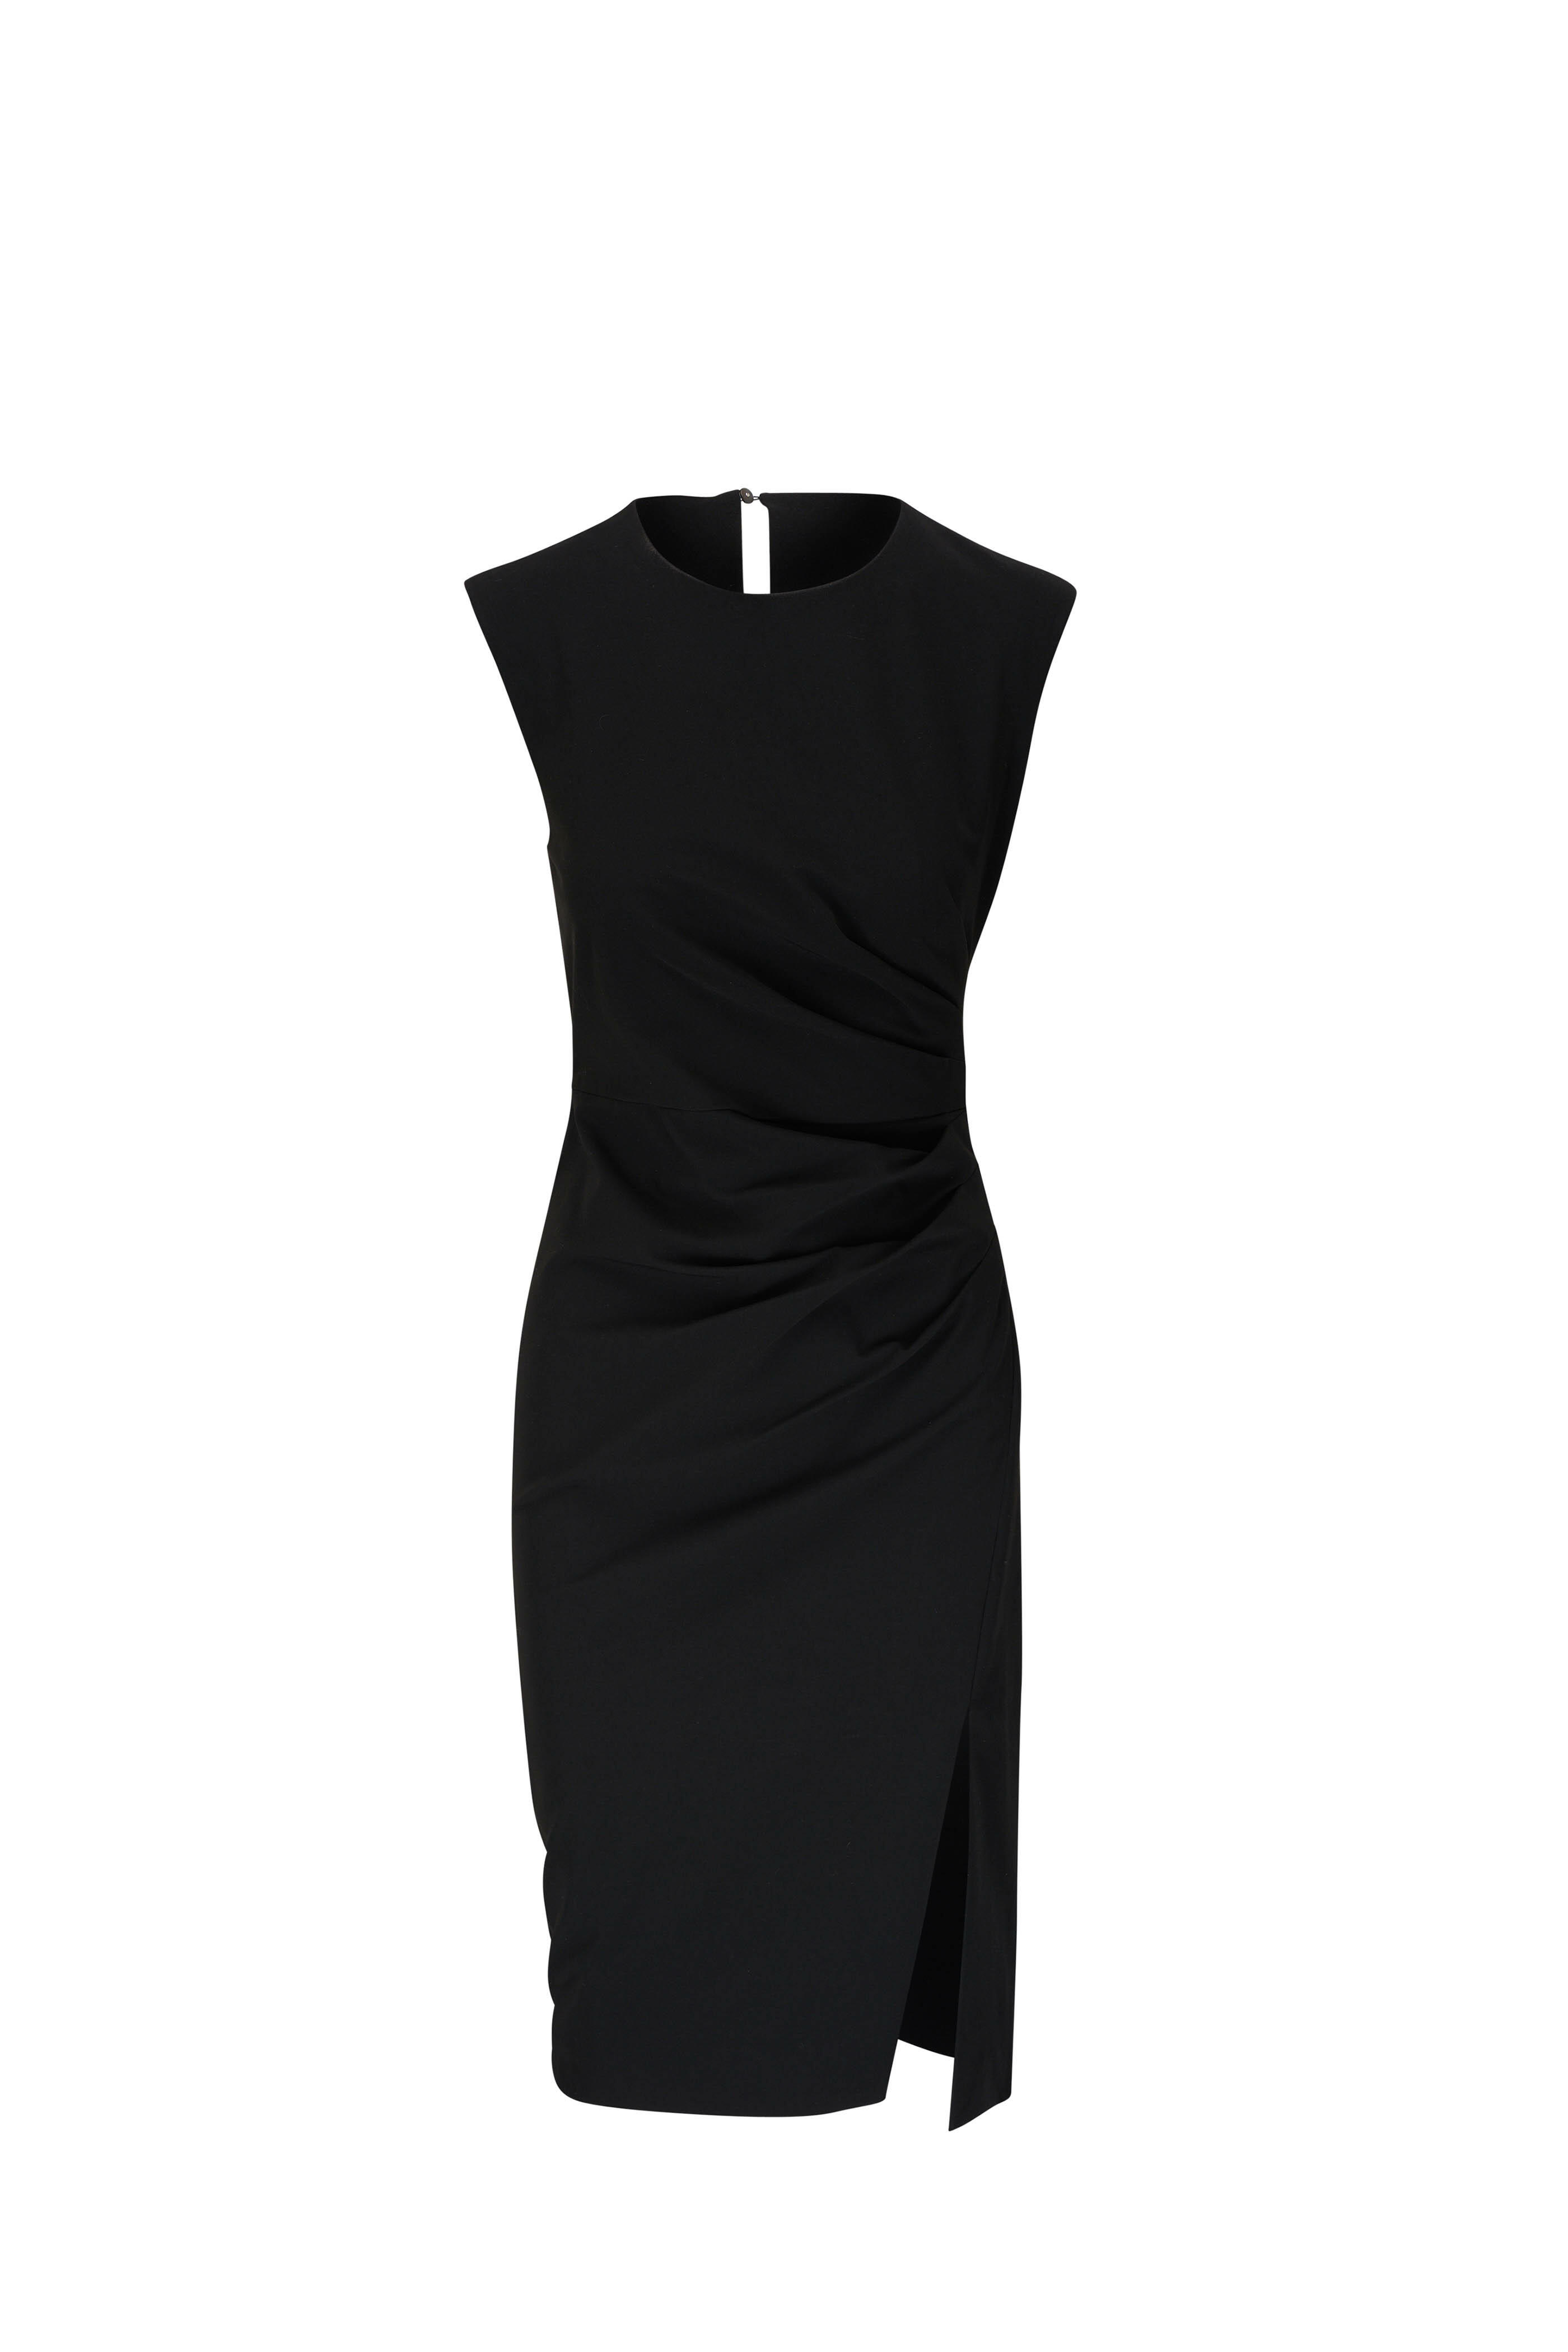 Veronica Beard - Latiki Black Dress | Mitchell Stores